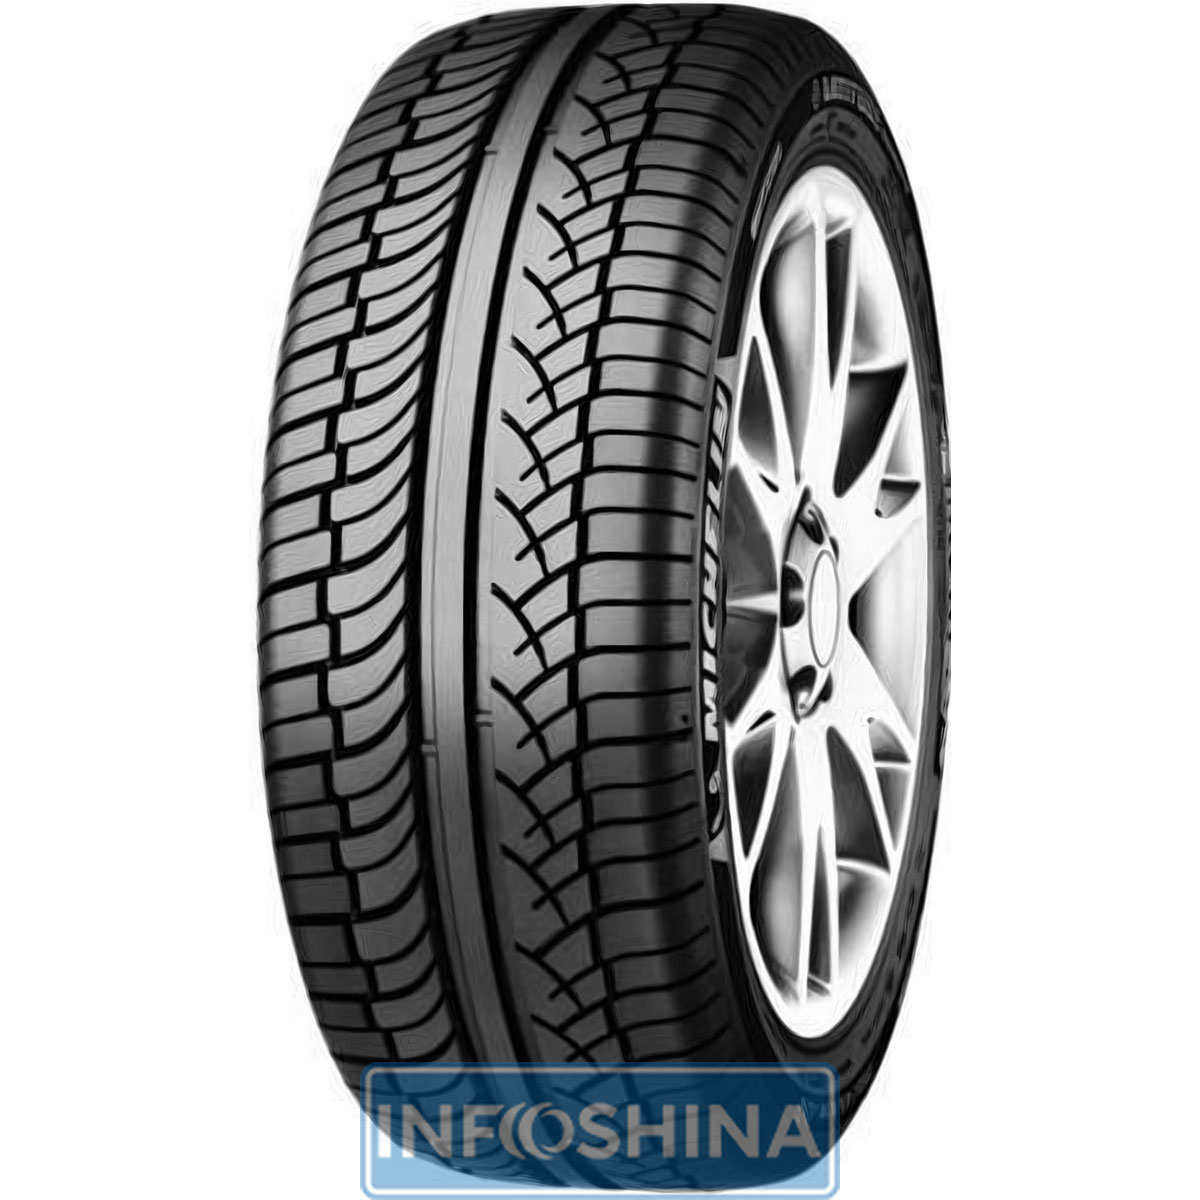 Купить шины Michelin Latitude Diamaris 285/45 R19 107V